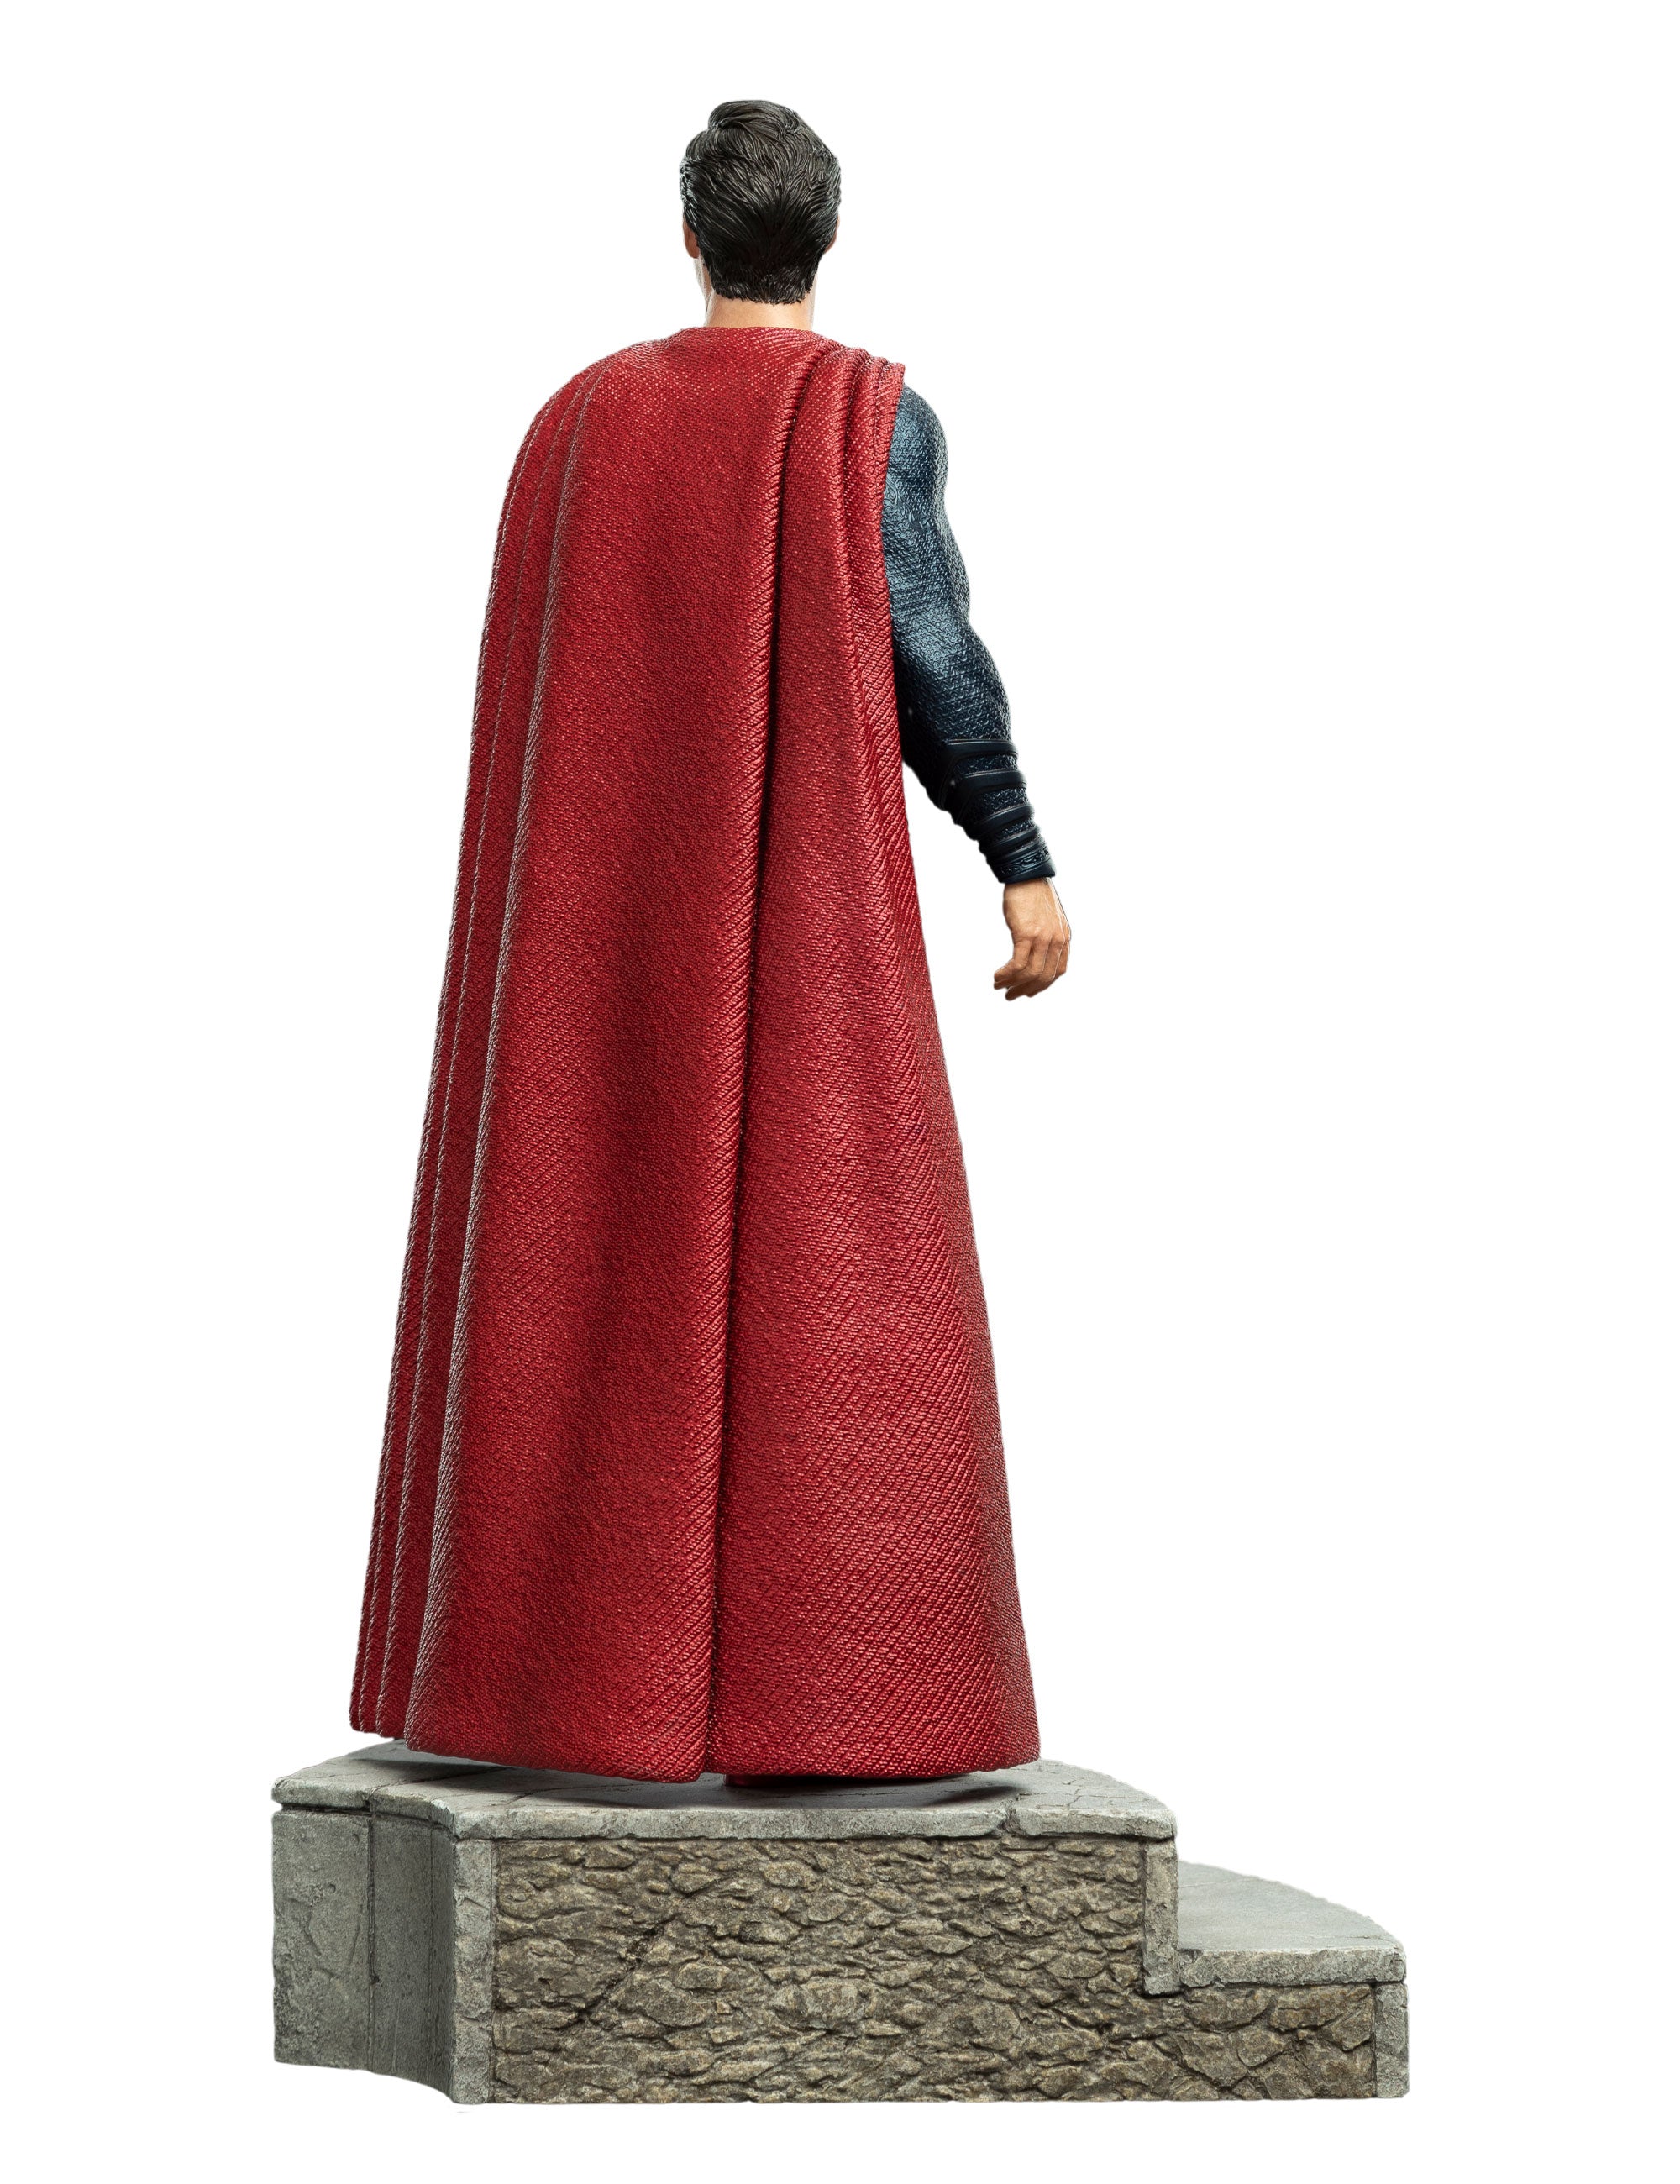 Iron Studios Superman Justice League PVC Statue Figure Collectible